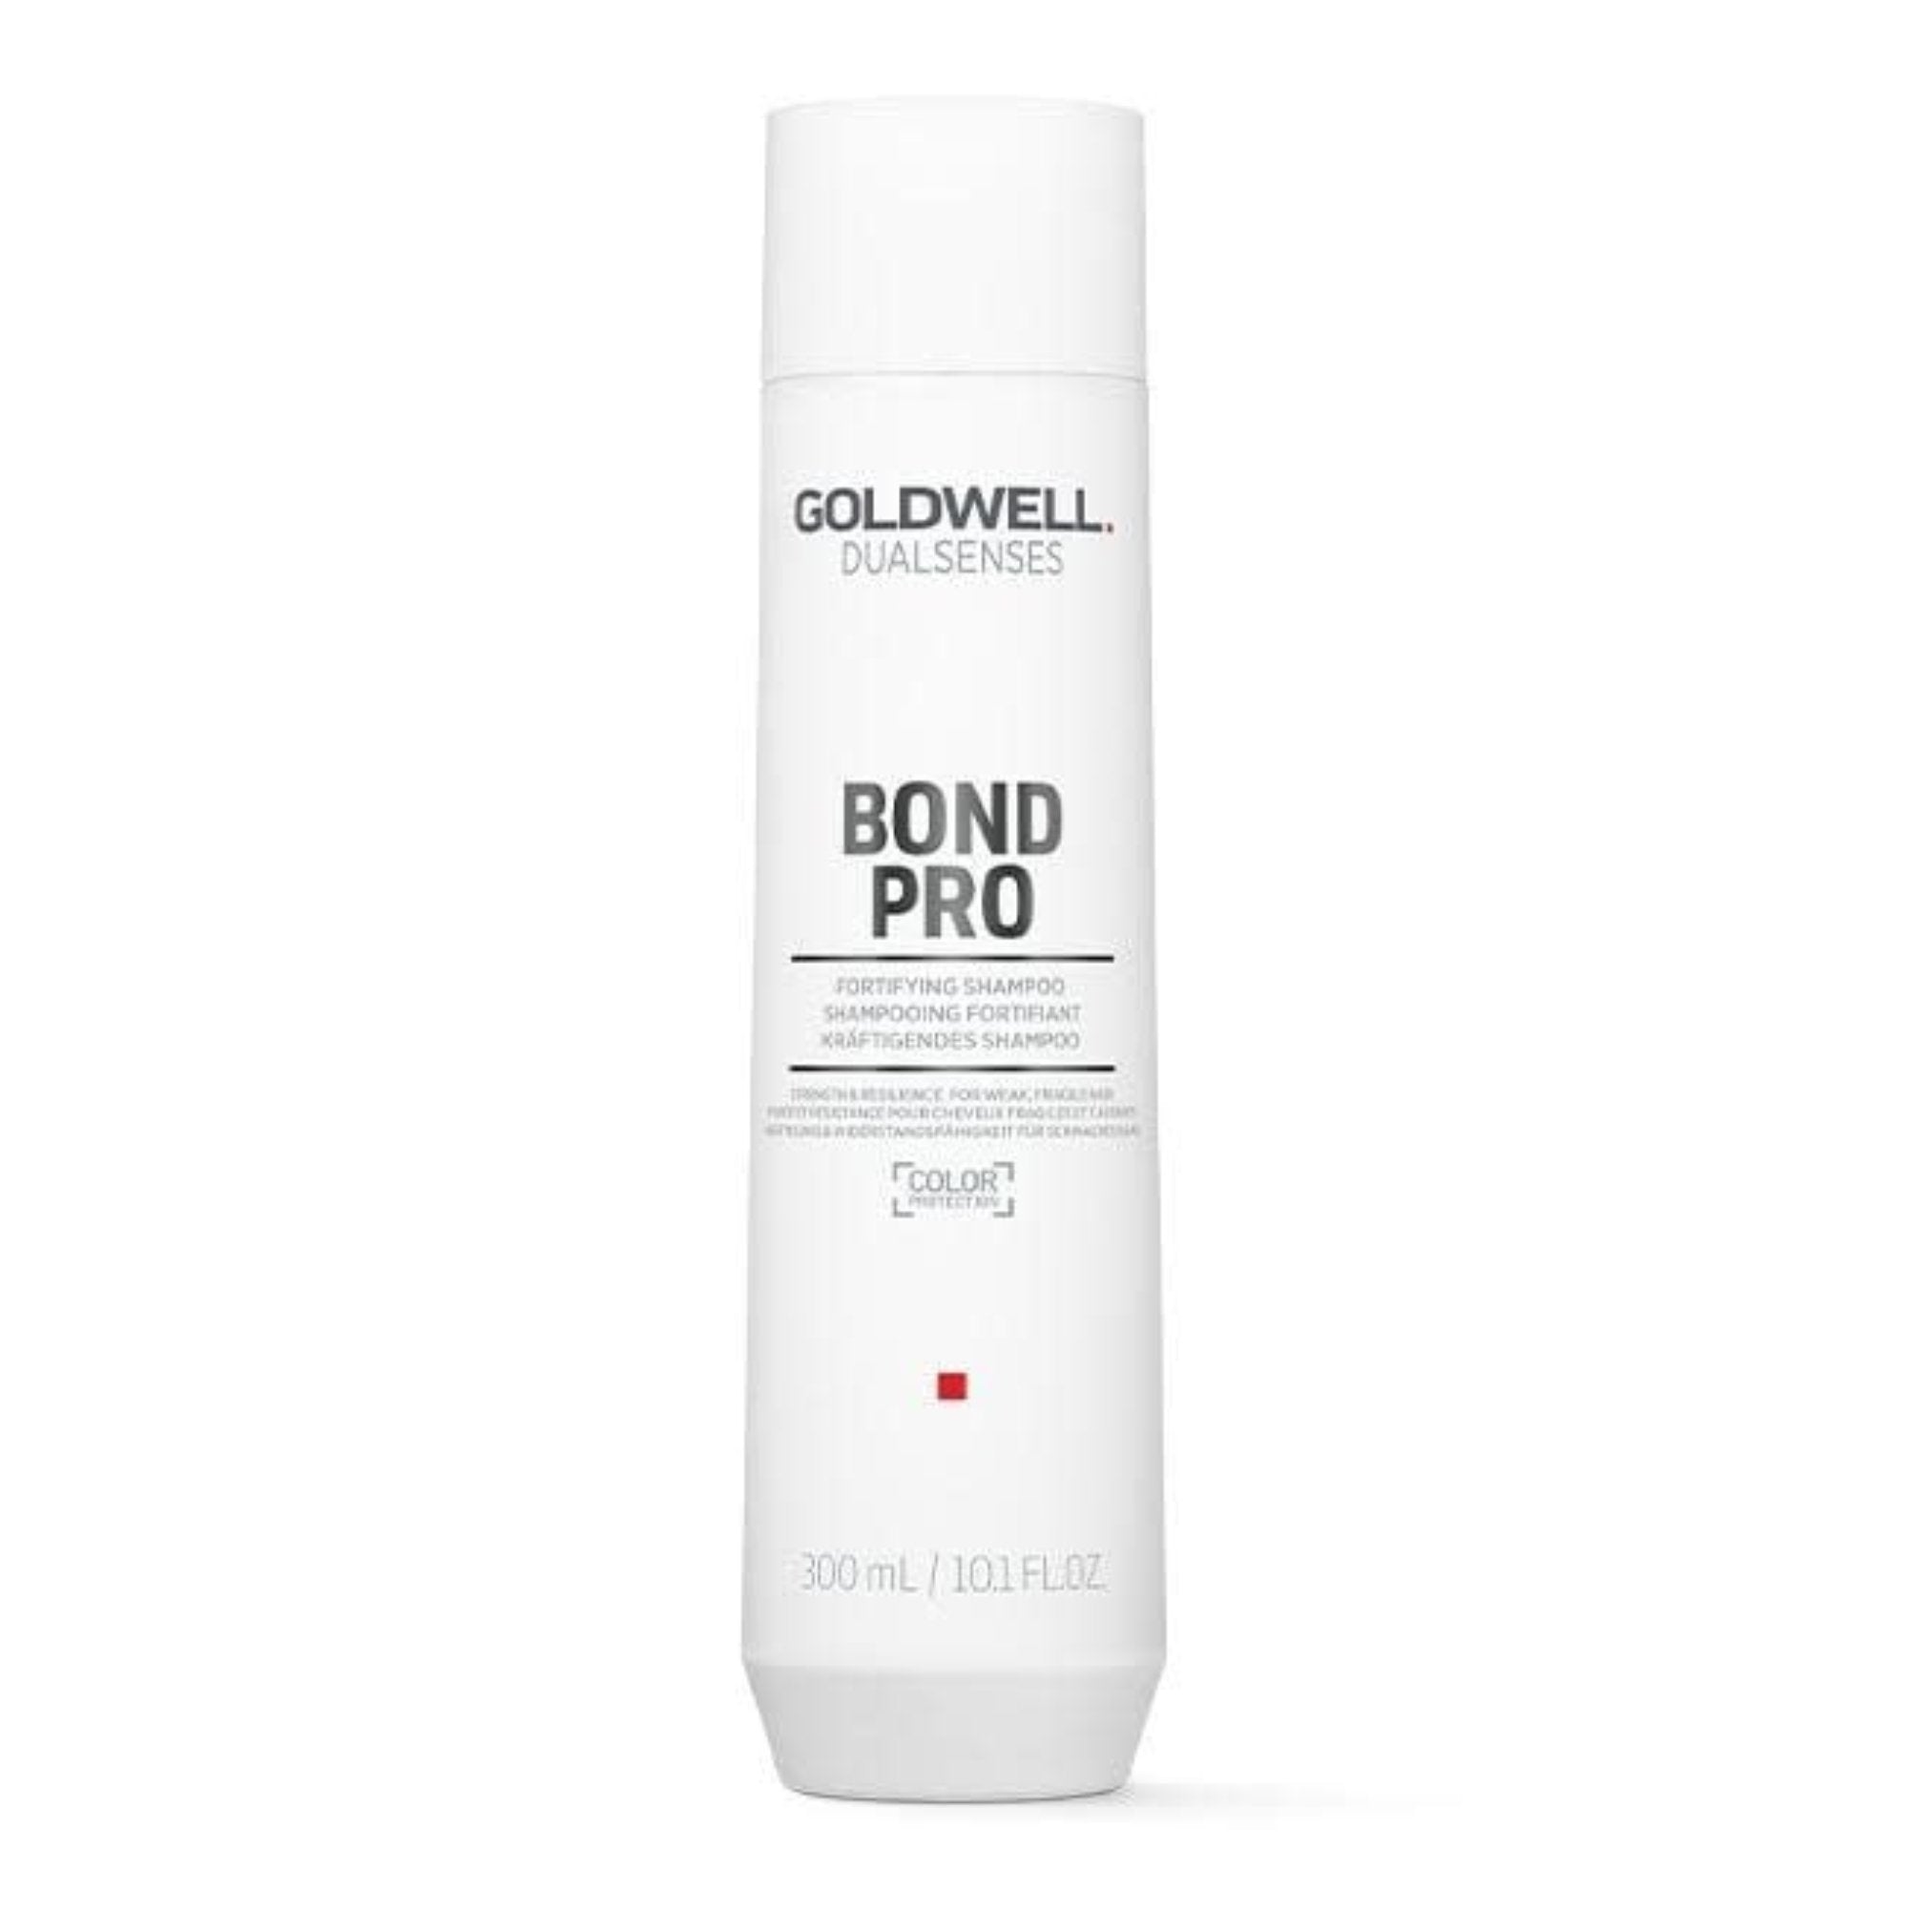 Goldwell. Dual Senses Bond Pro Shampoing Fortifiant - 300 ml - Concept C. Shop